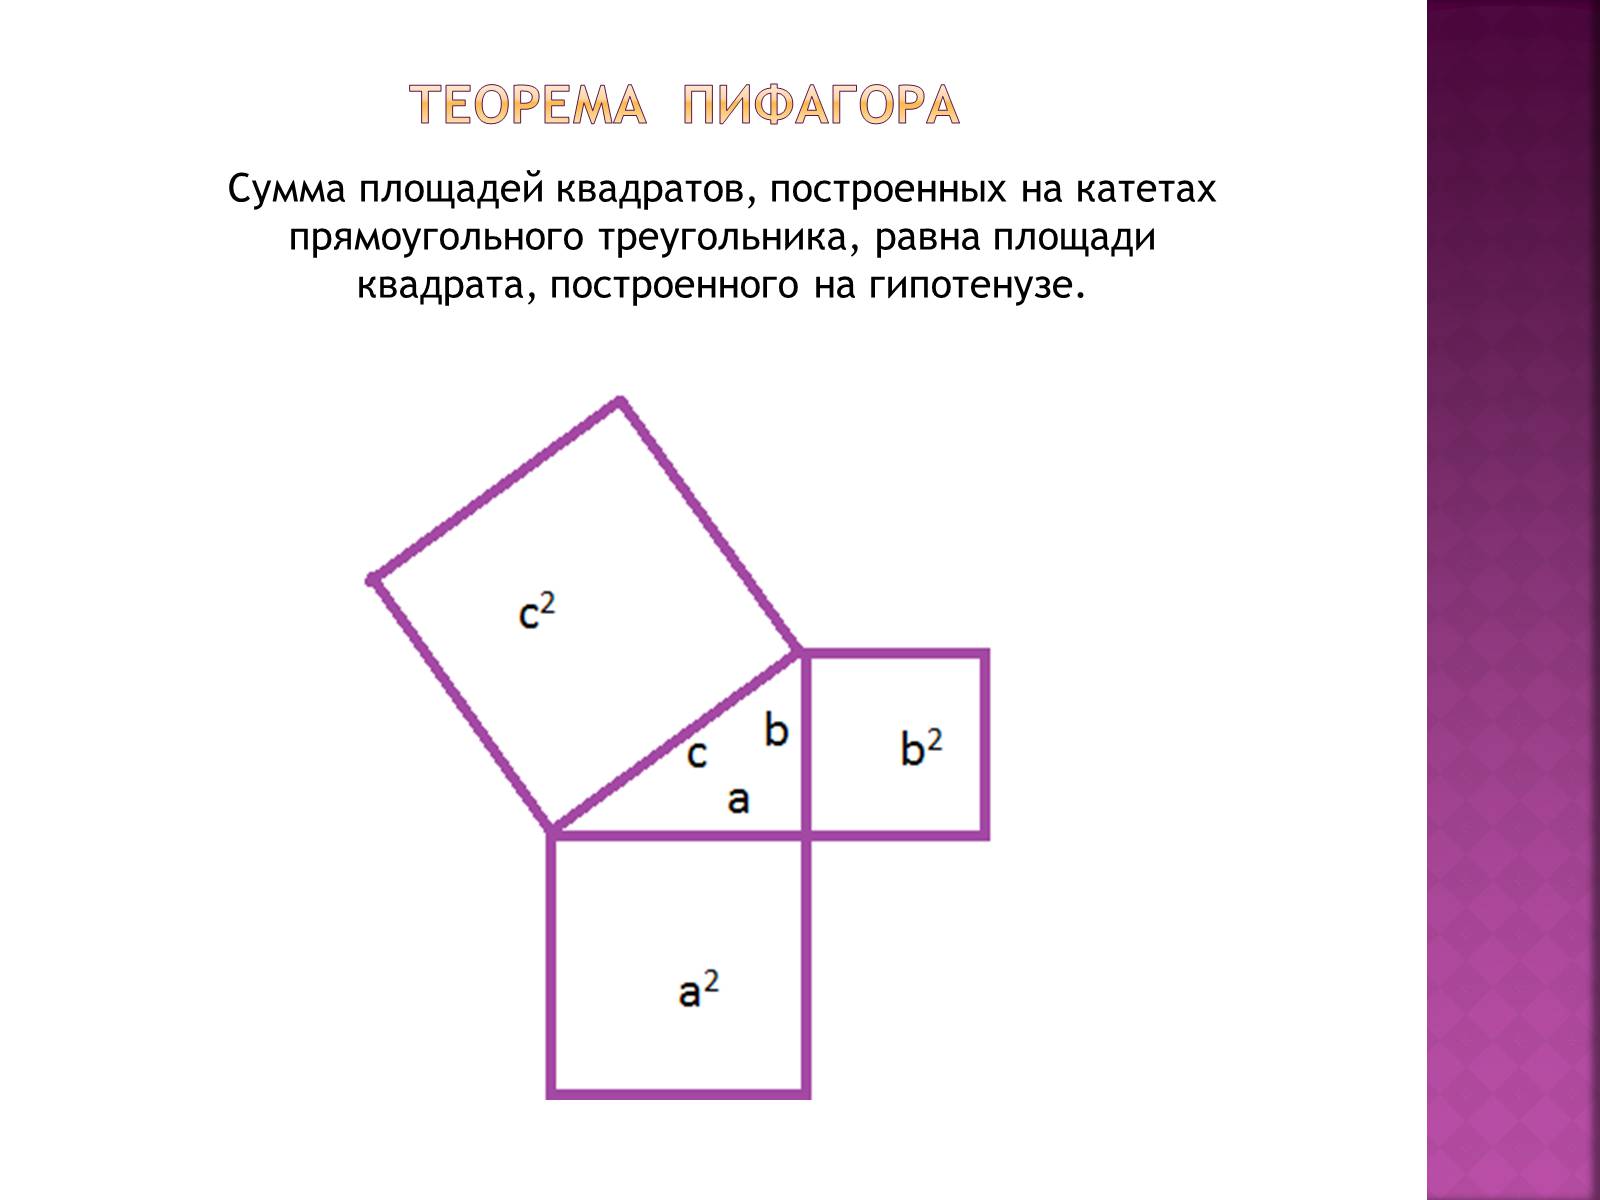 Сумма площадей квадратов